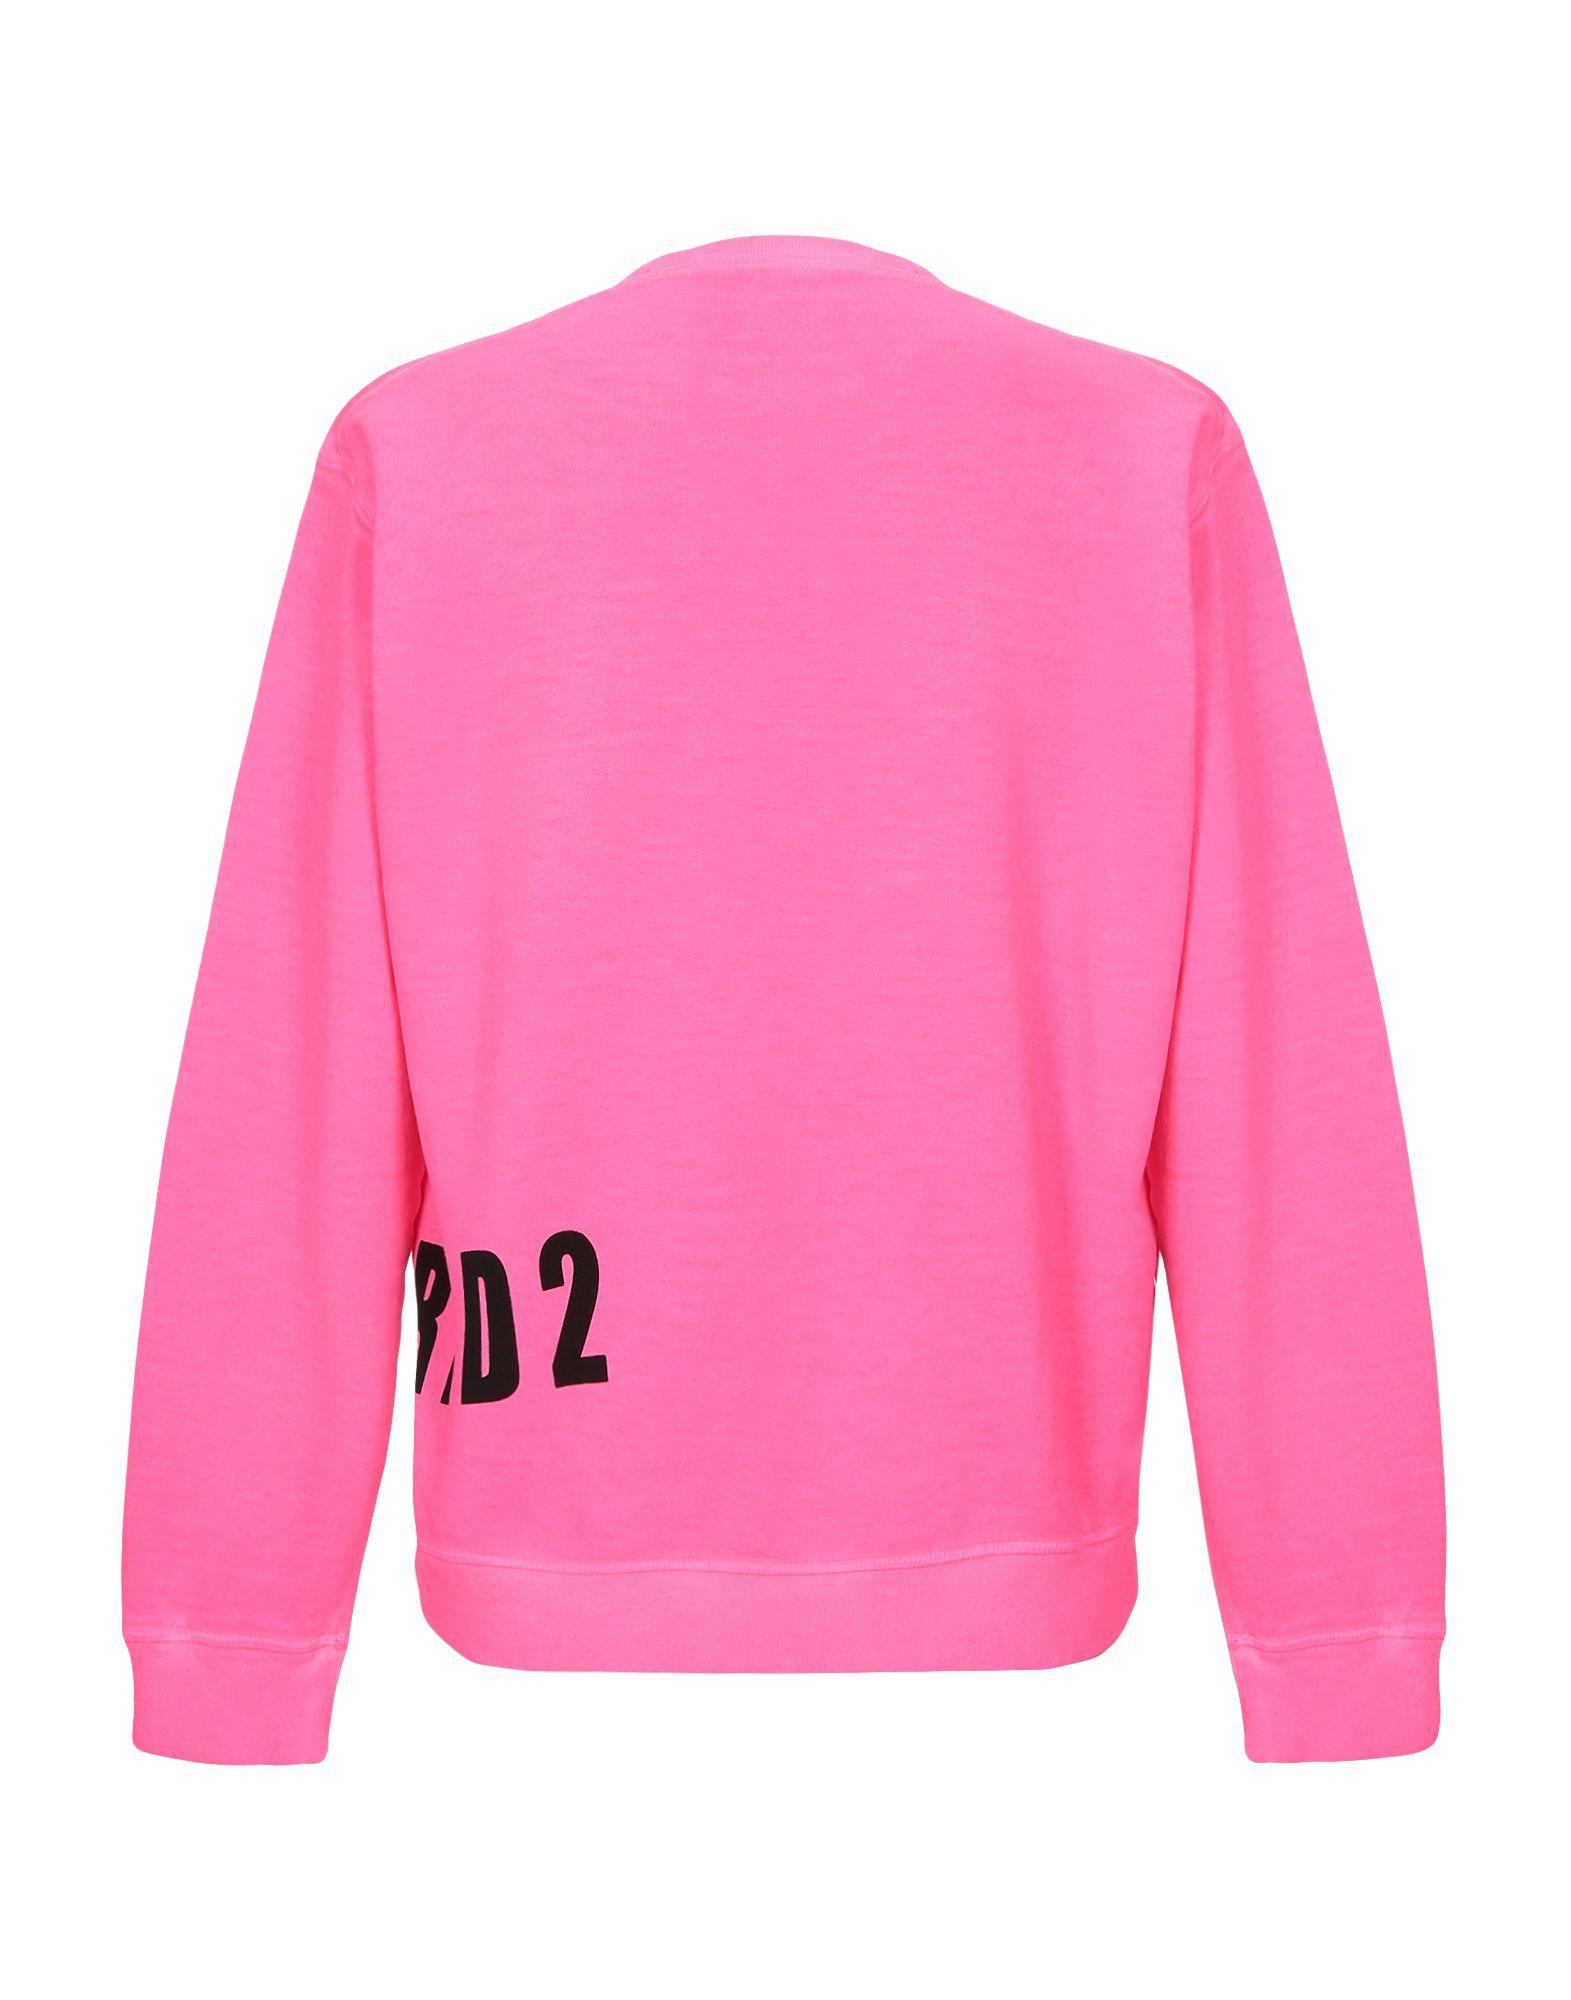 DSquared² Sweatshirt in Pink for Men - Lyst